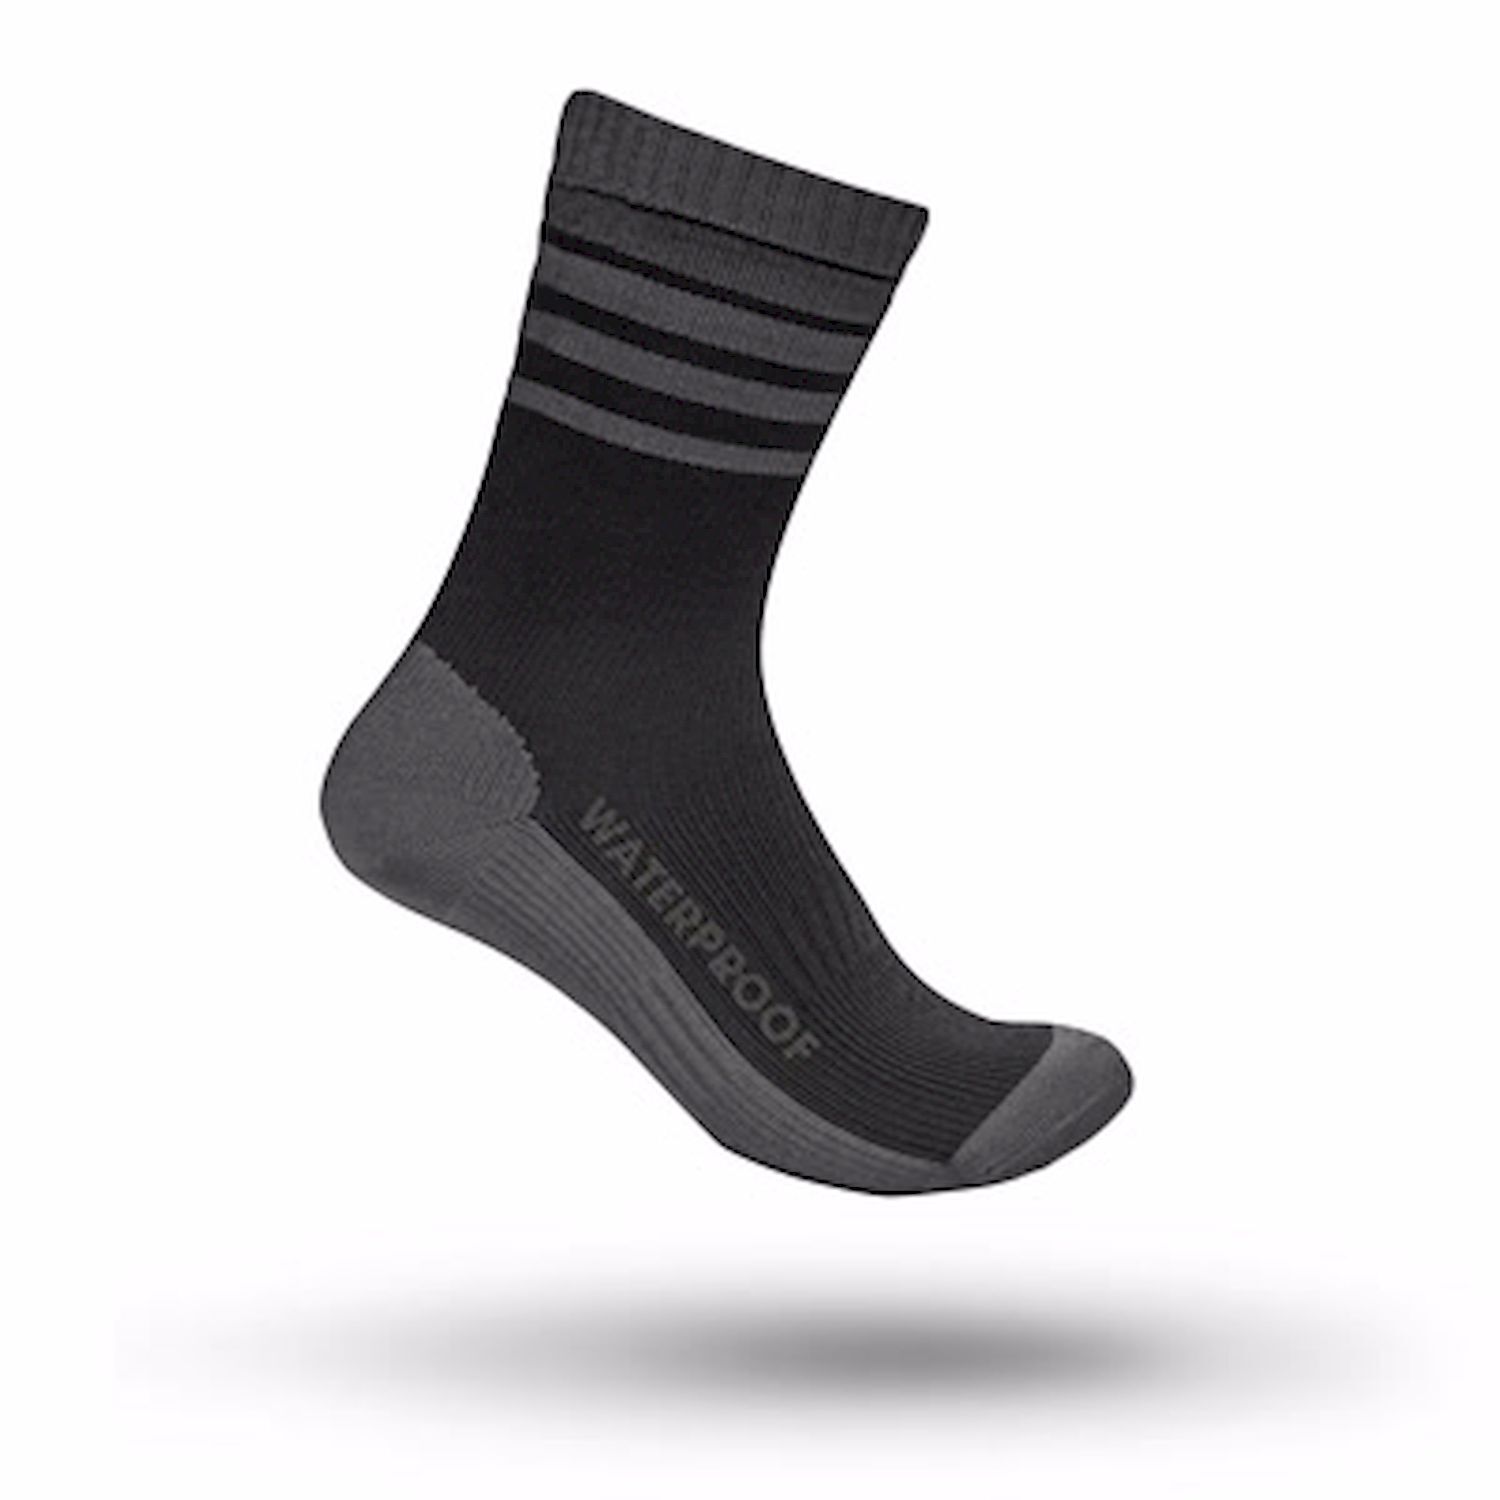 GripGrab Waterproof Merino Thermal Socks - Cycling socks